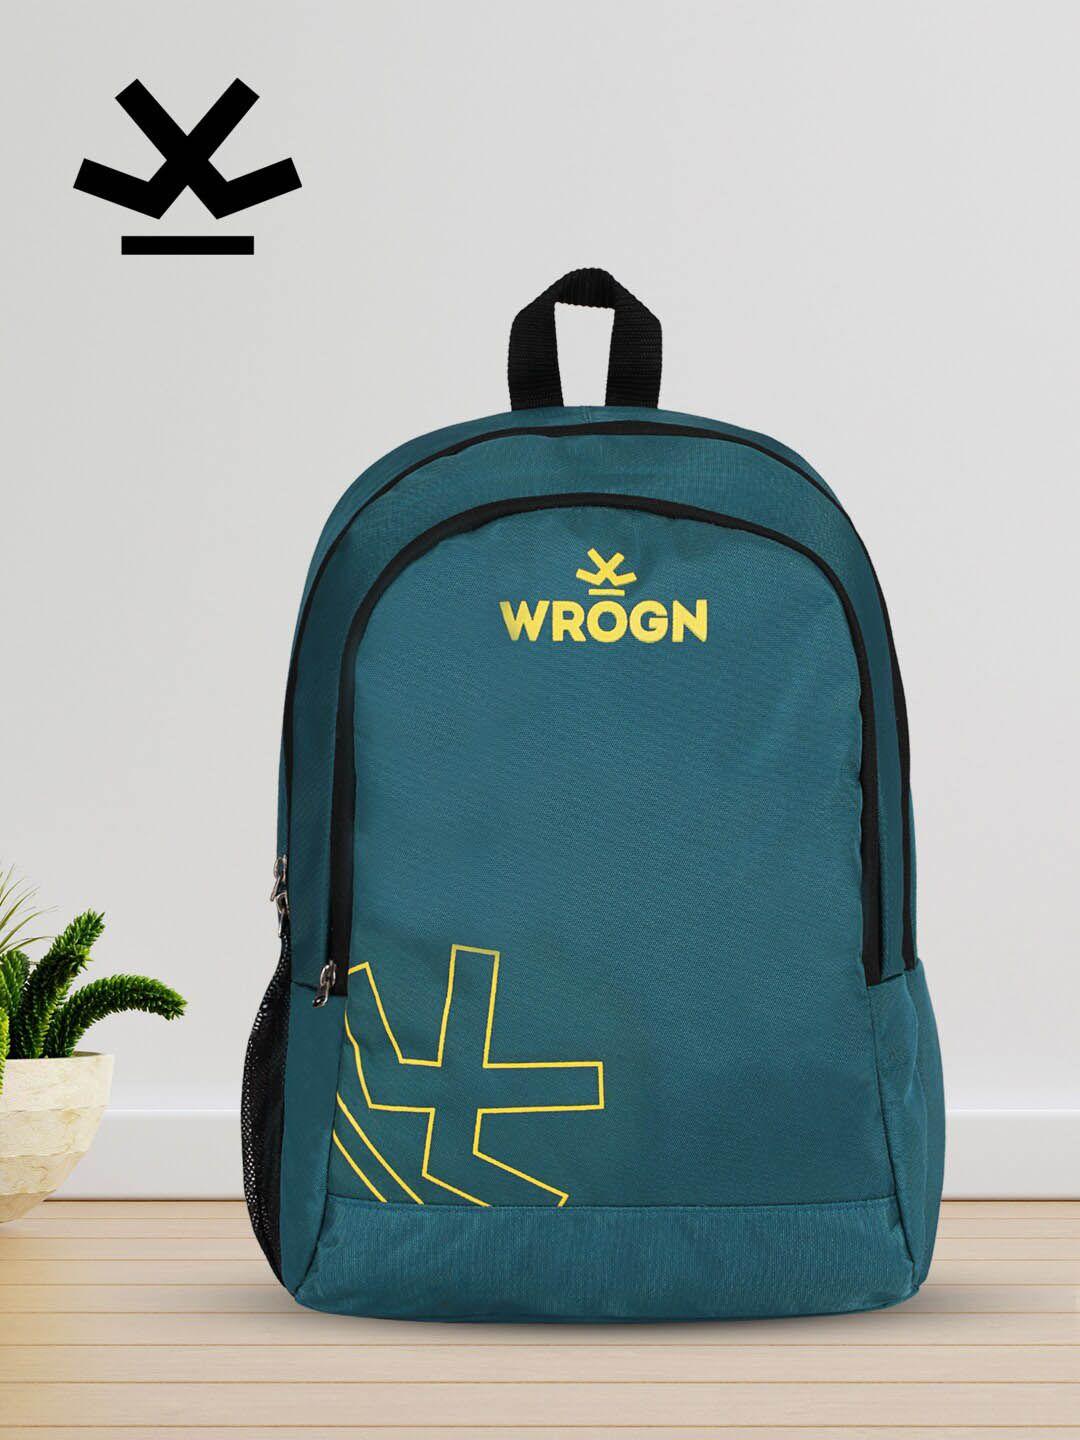 wrogn brand logo water resistant laptop backpack